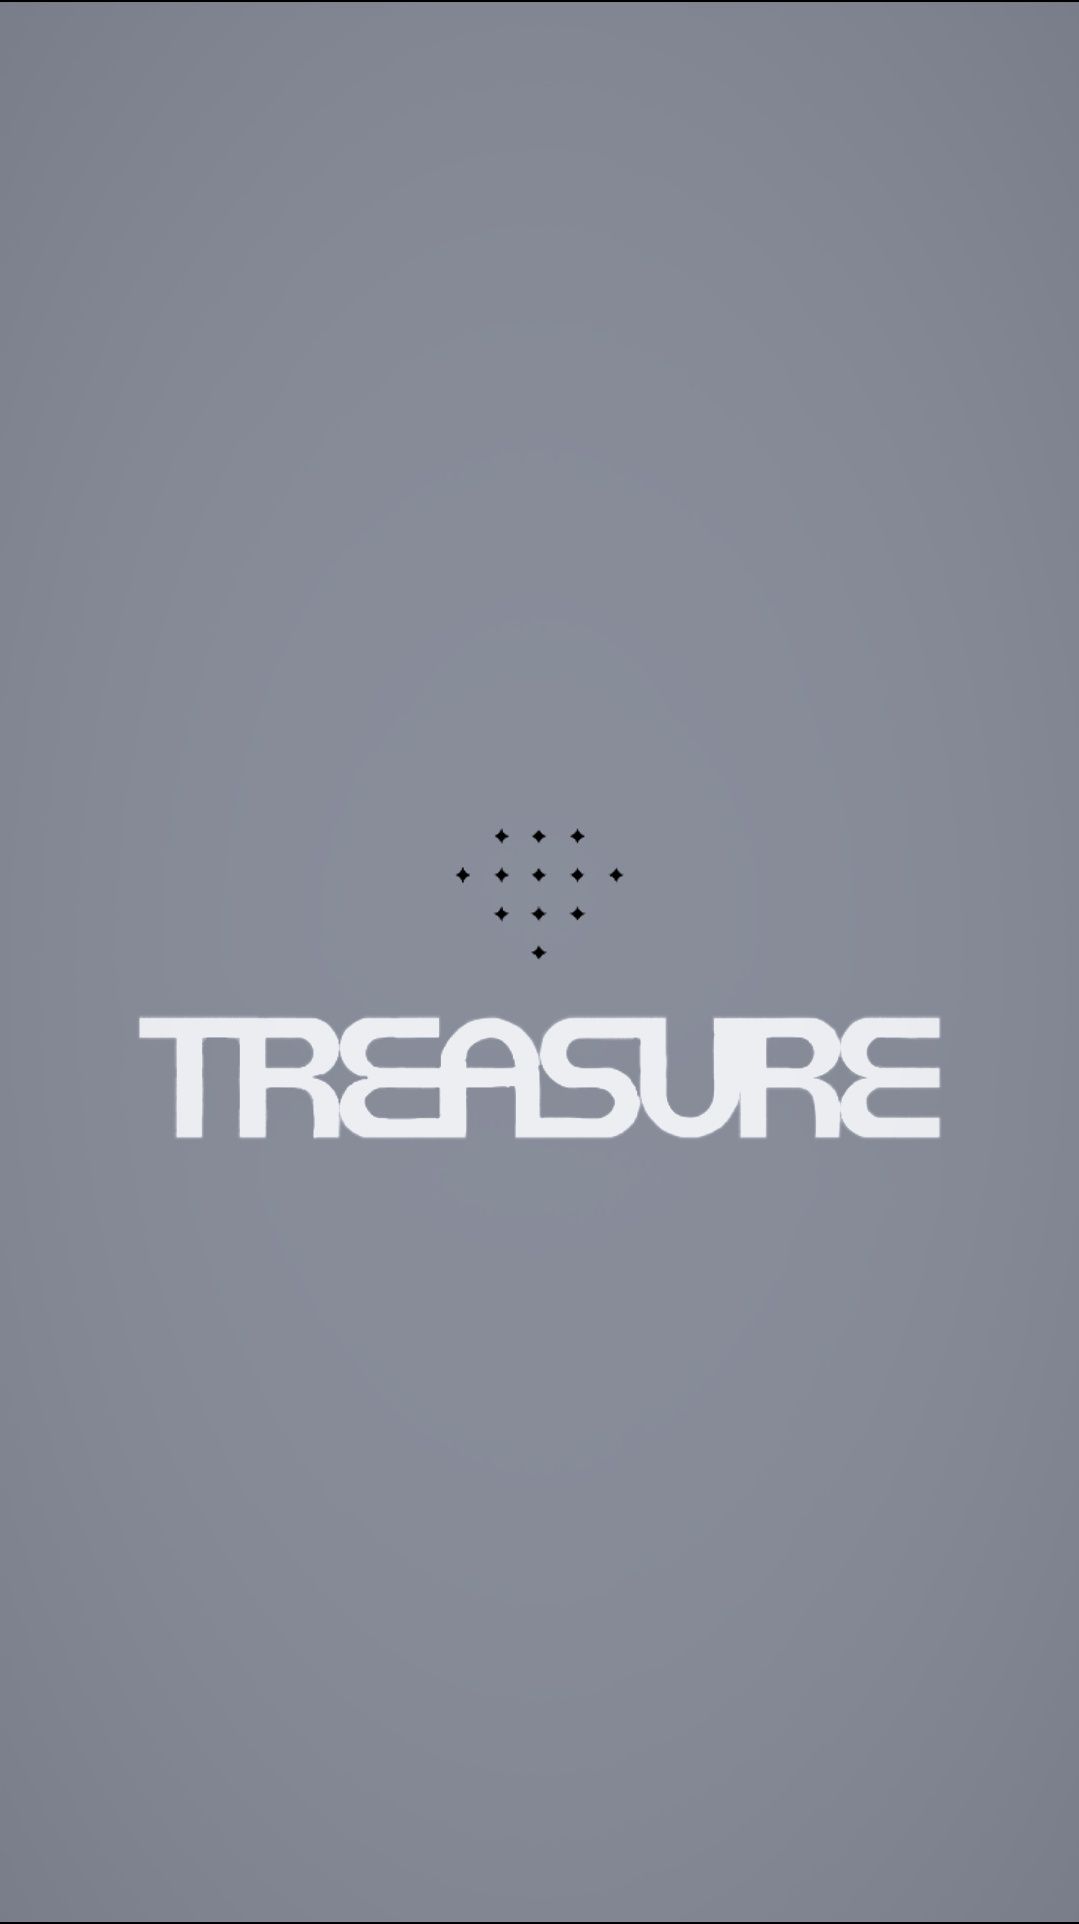 Account Suspended. Treasures, Picture logo, Kpop wallpaper